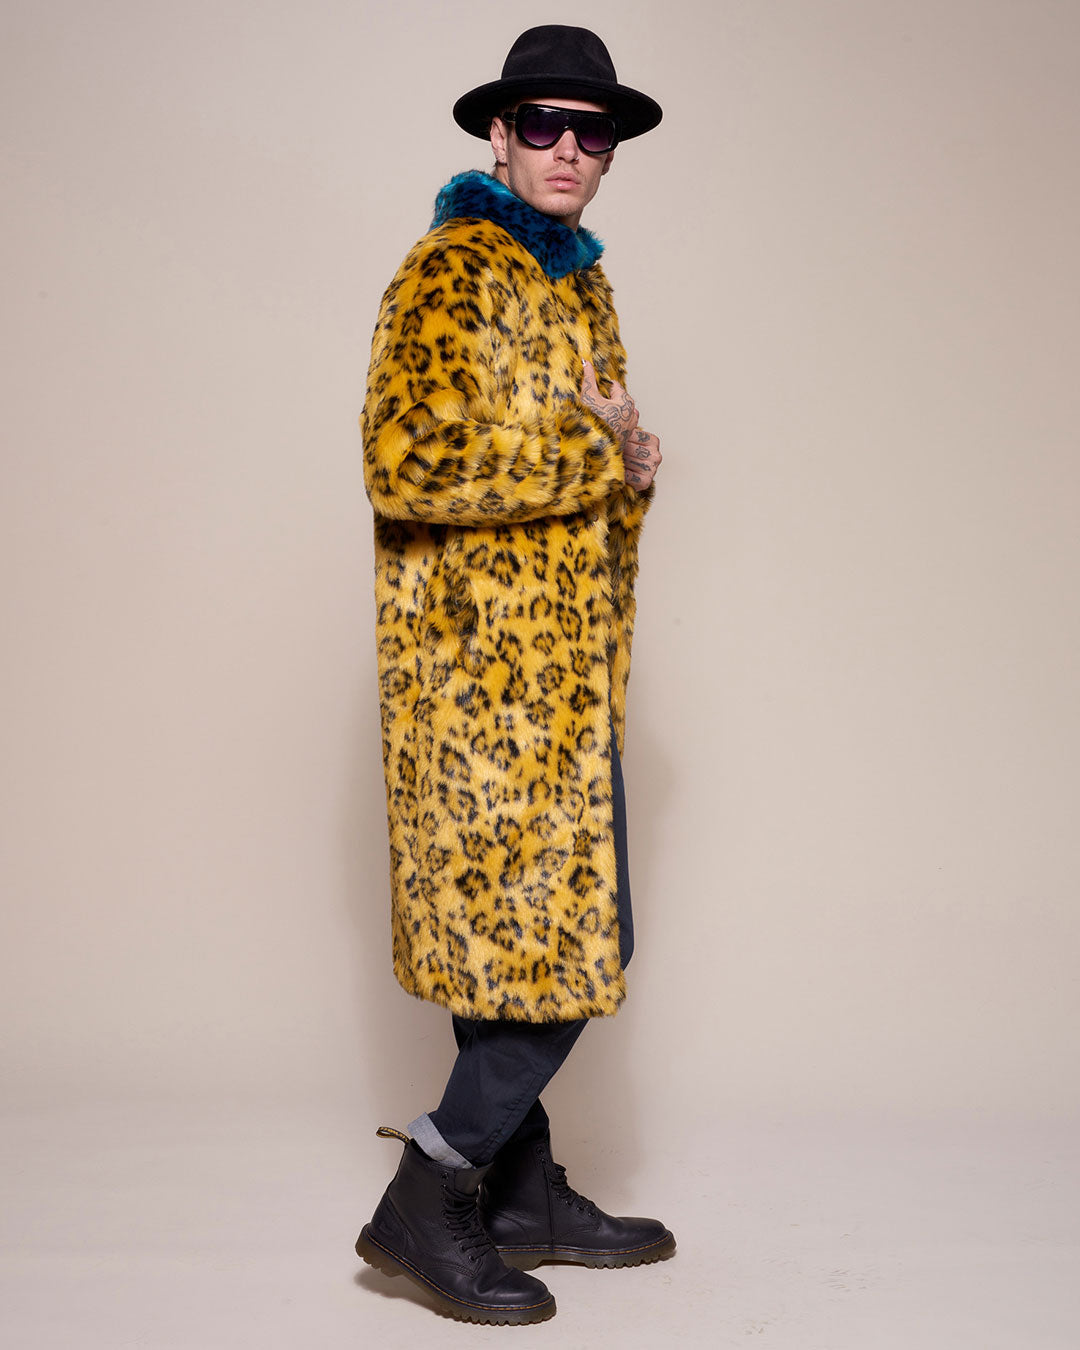 Collared Yellow Cheetah Faux Fur Coat on Male Model